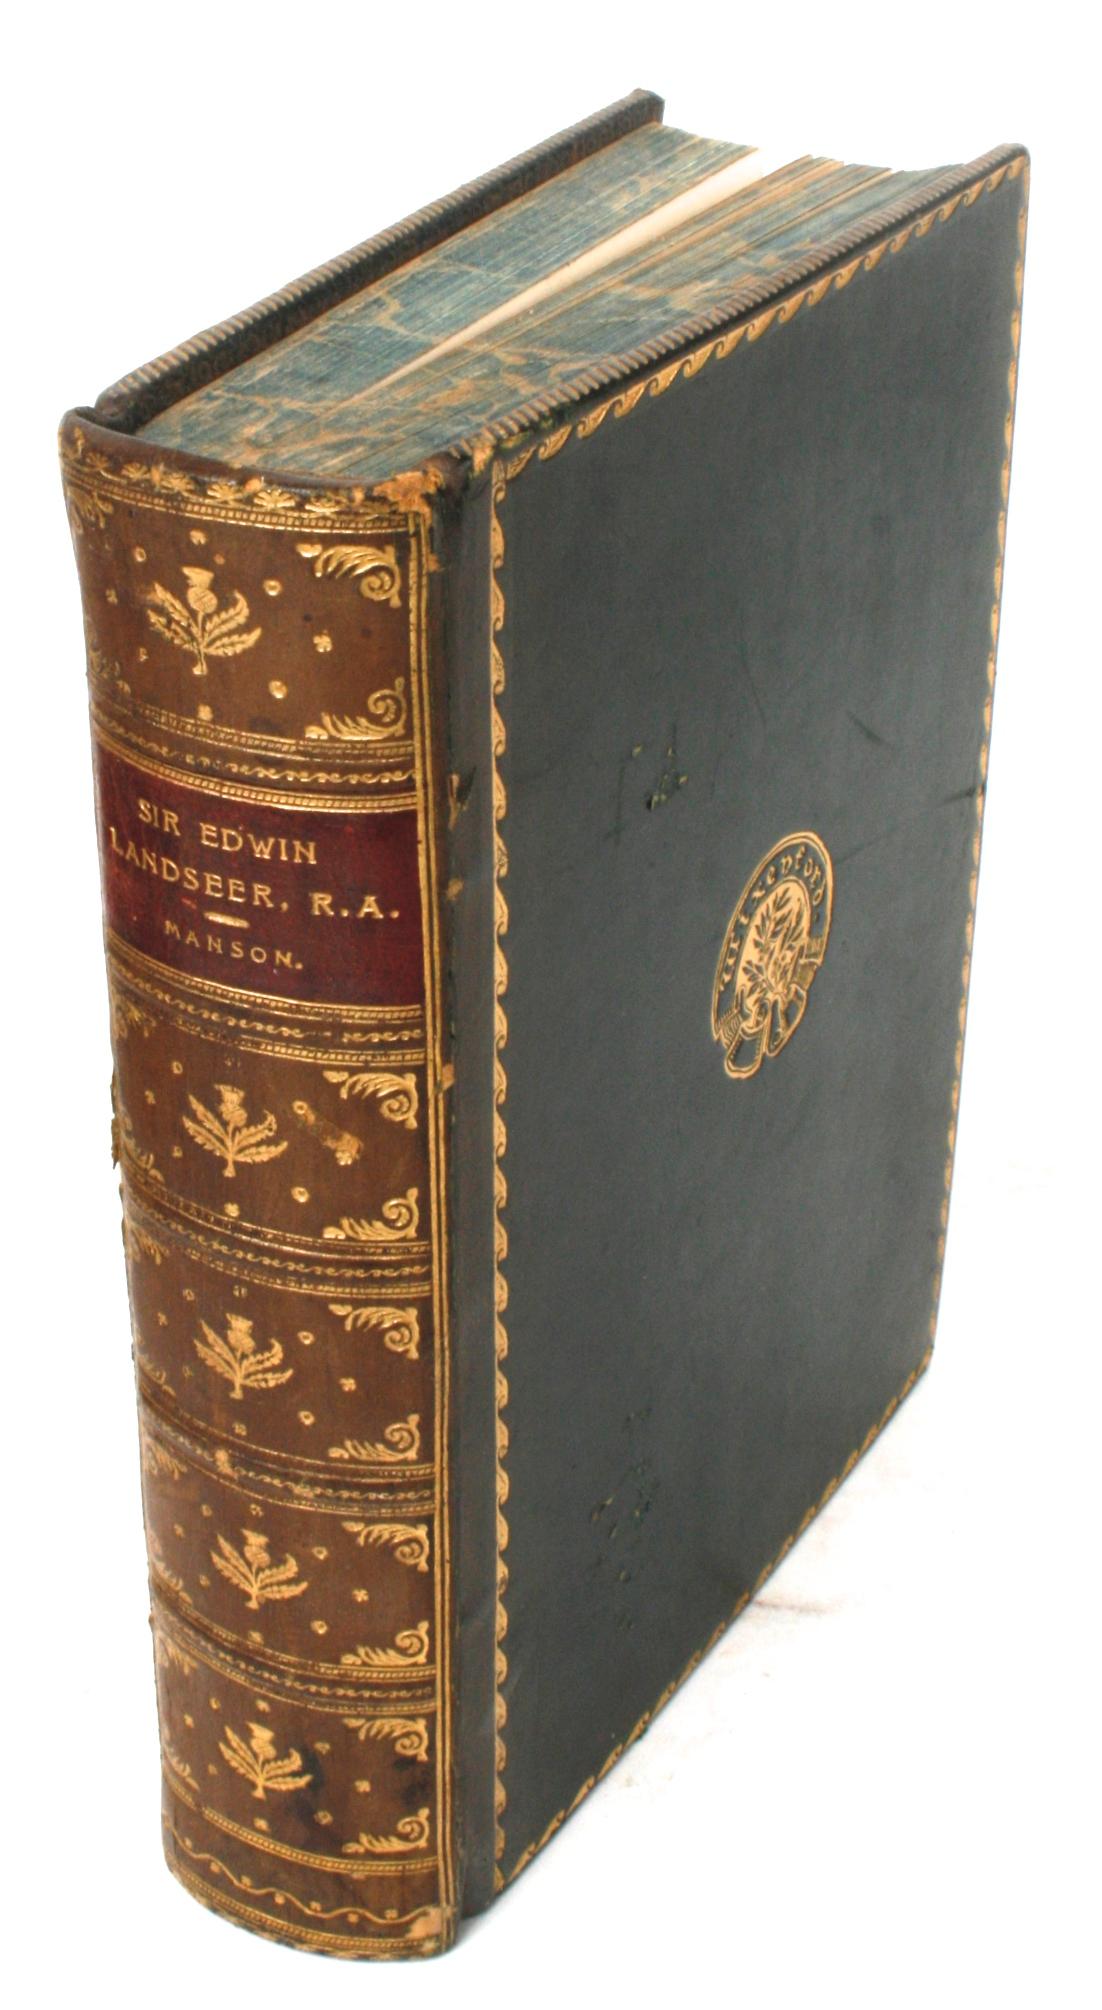 Sir Edwin Landseer R.a. by James a. Manson, 1st Edition, 1902 9